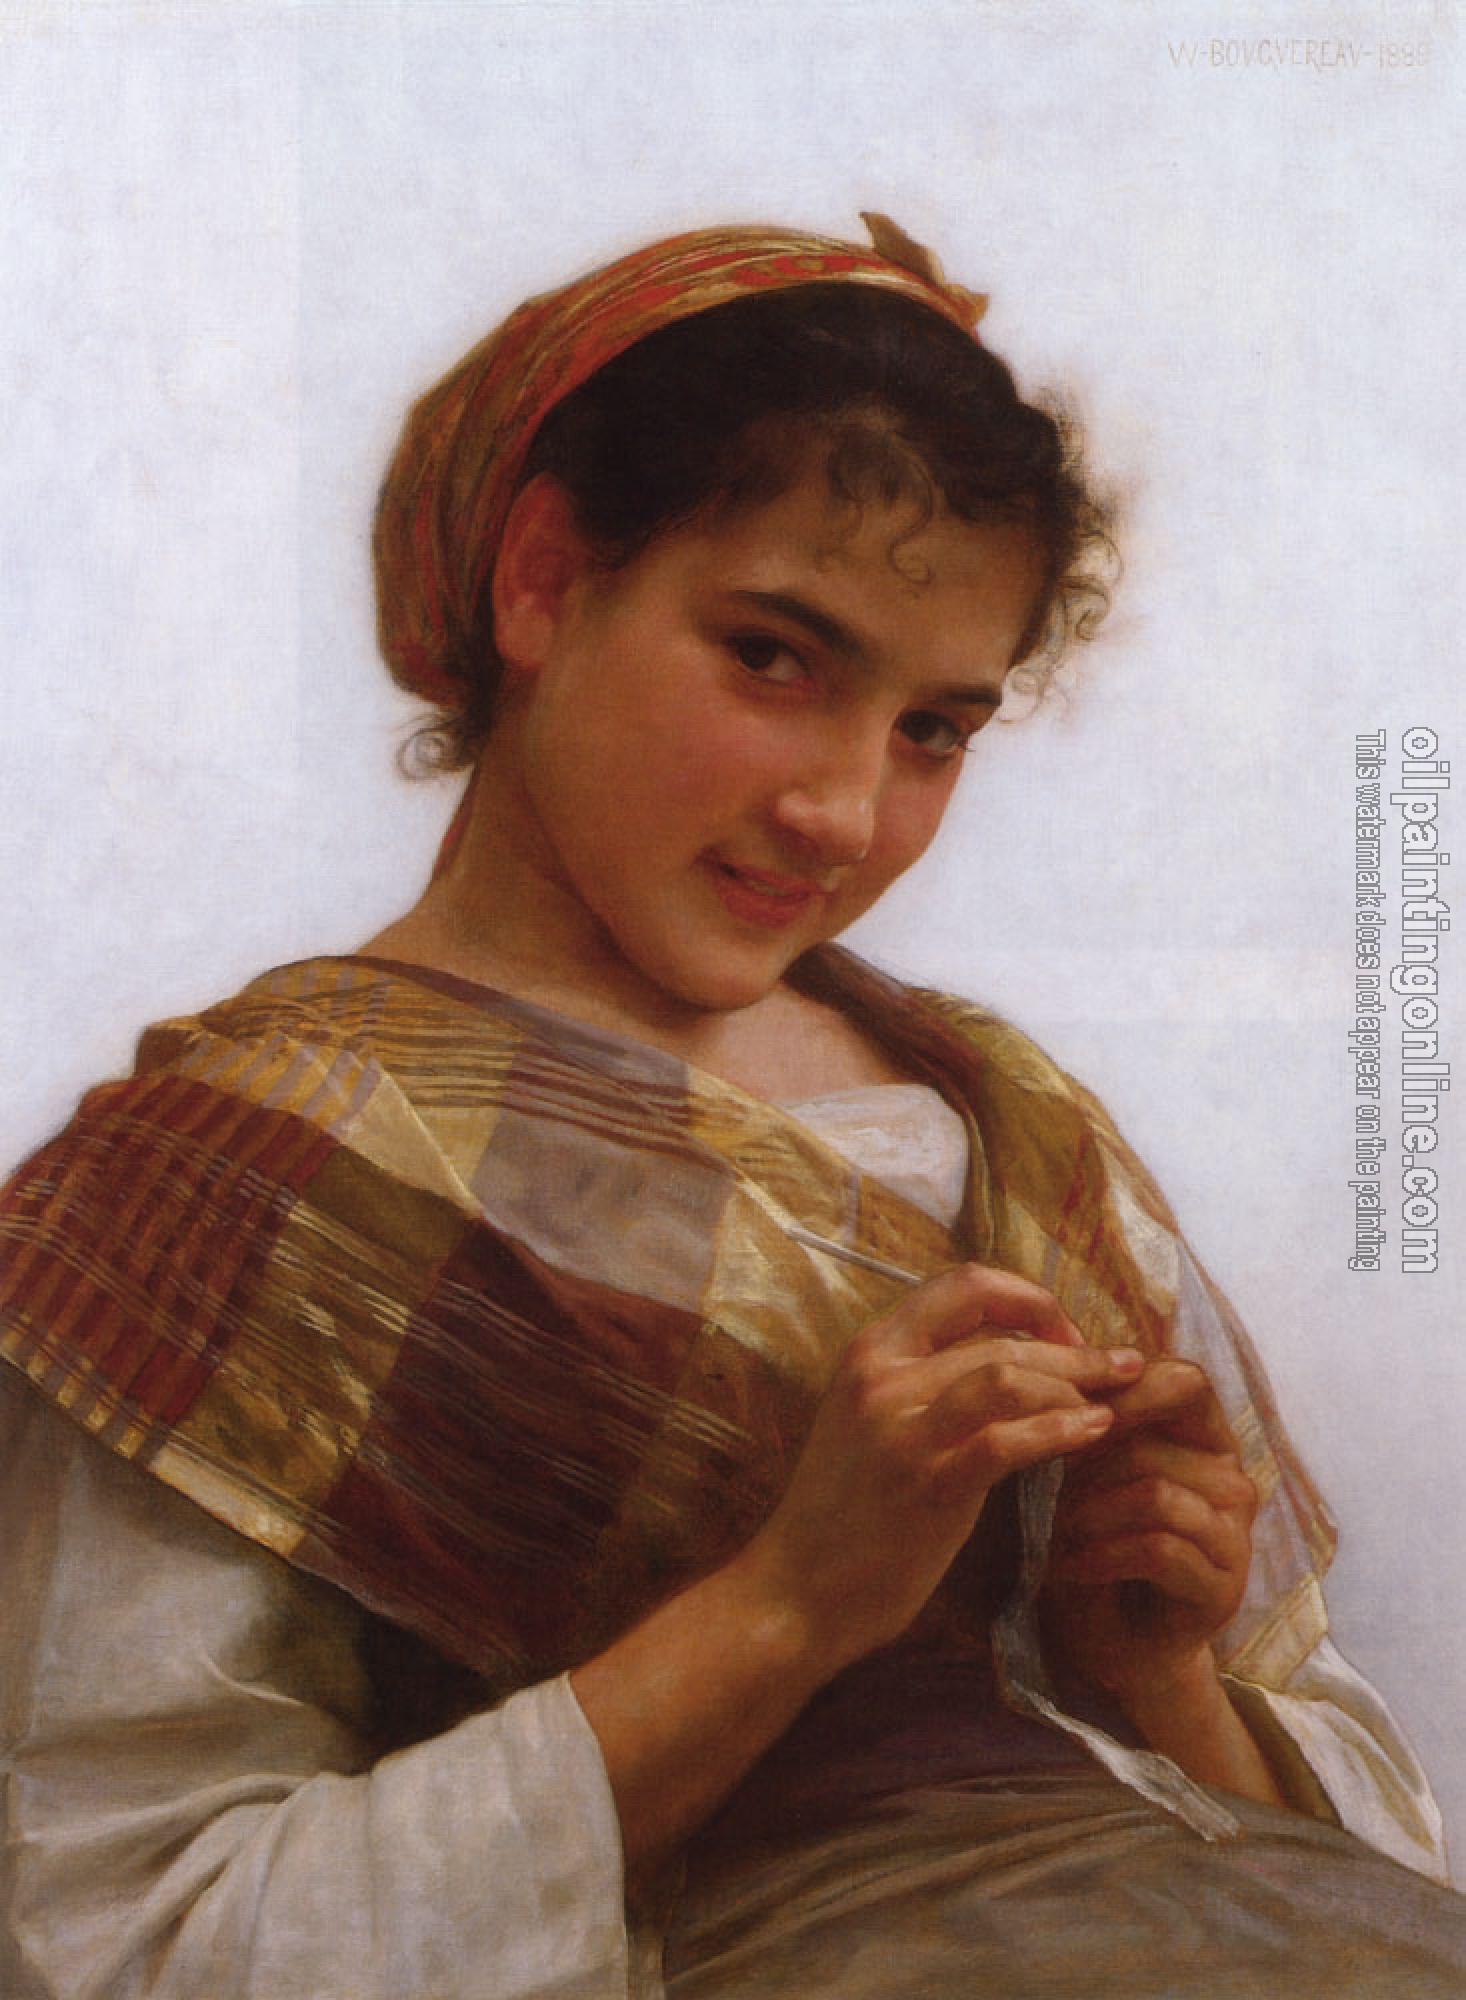 Bouguereau, William-Adolphe - Jeune fille au crochet, Young girl crocheting.